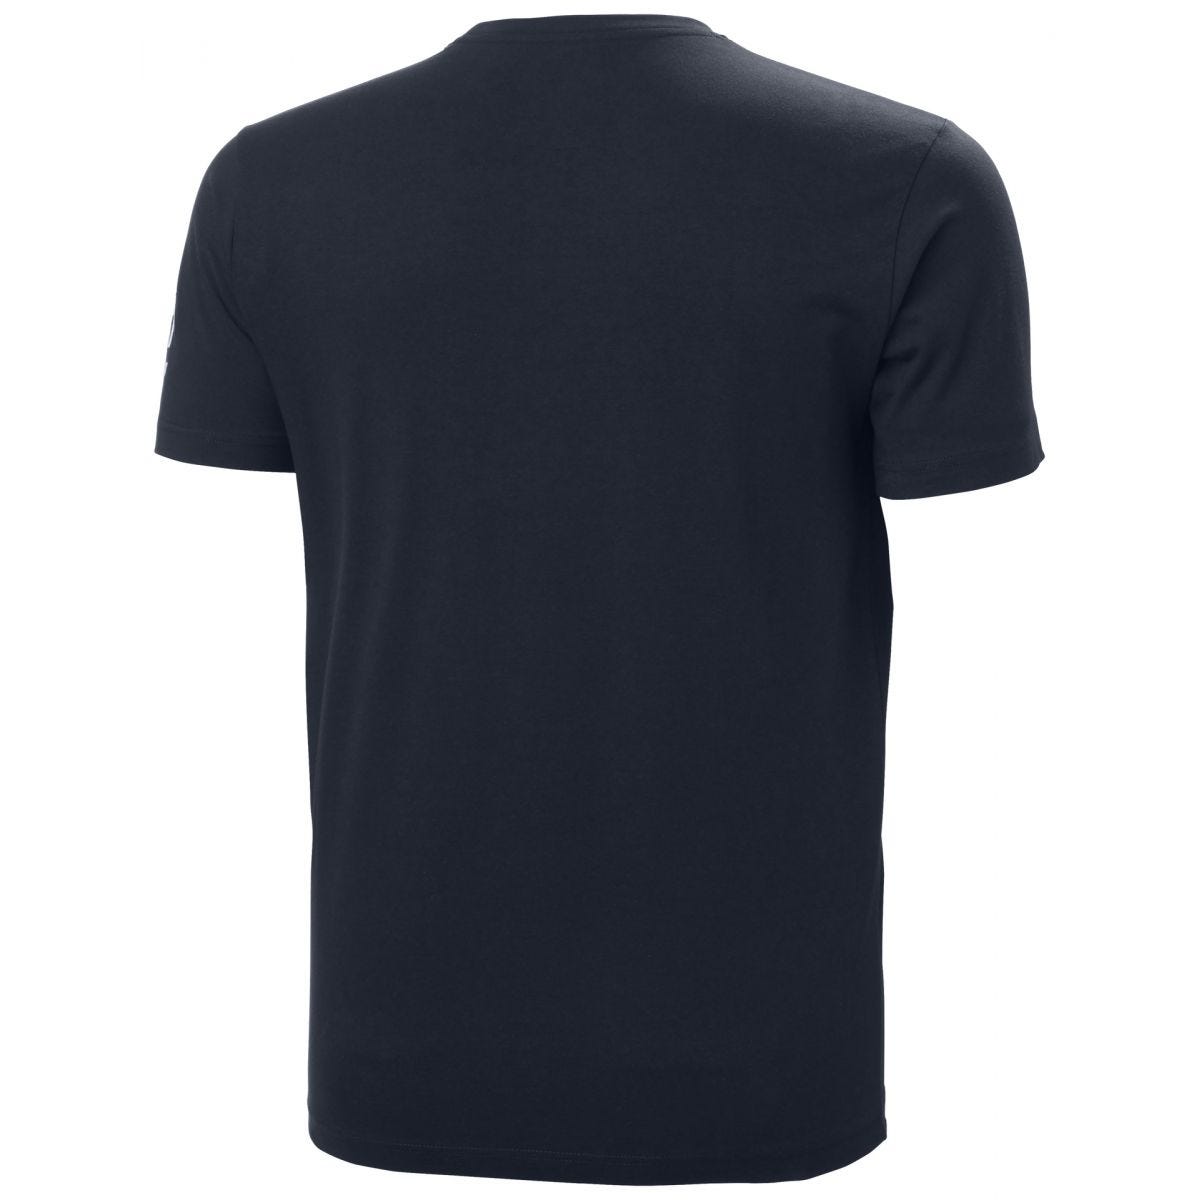 Tee-shirt Kensington Marine - Helly Hansen - Taille 3XL 1